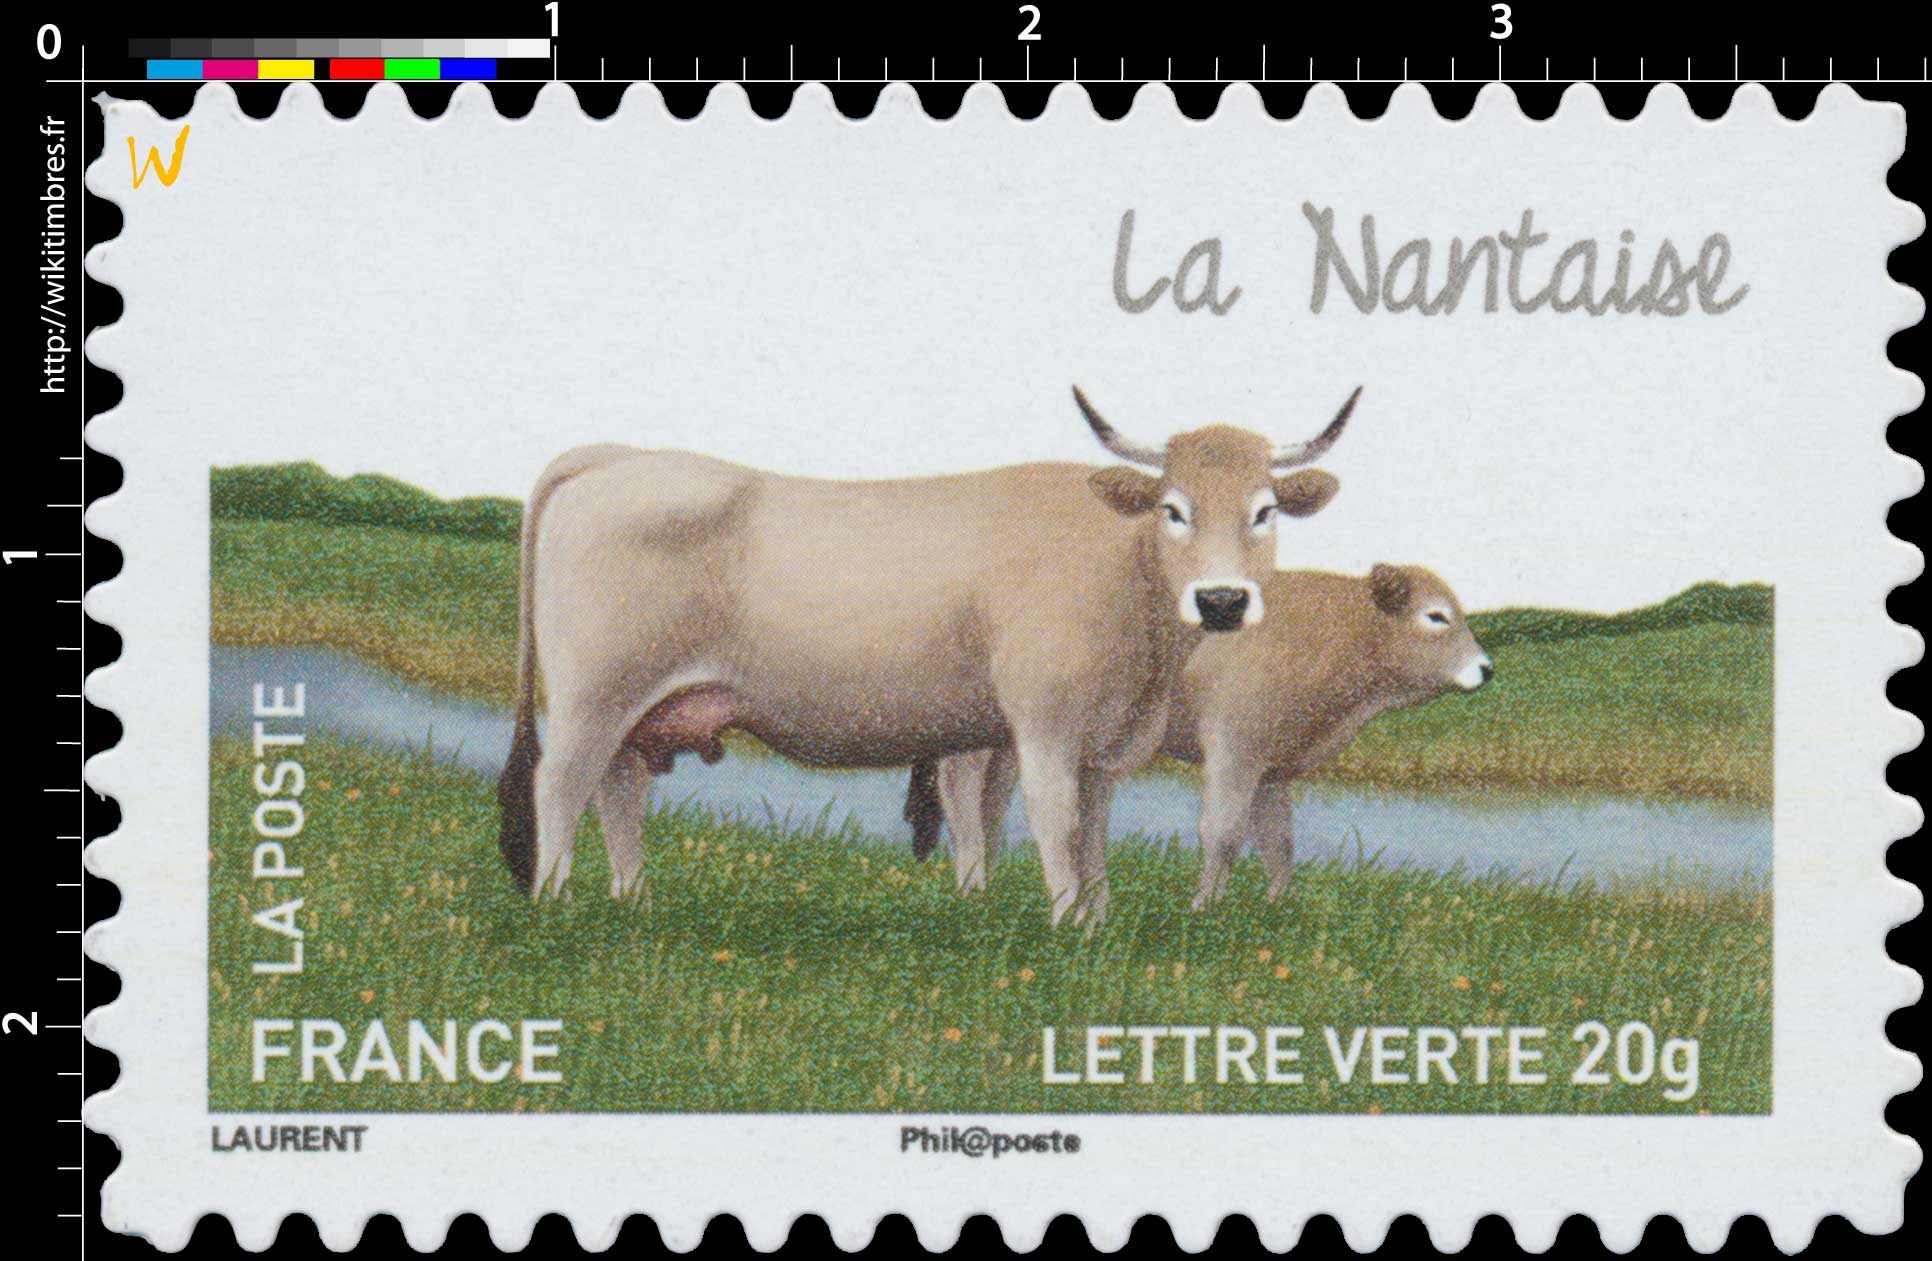 2014 La Nantaise